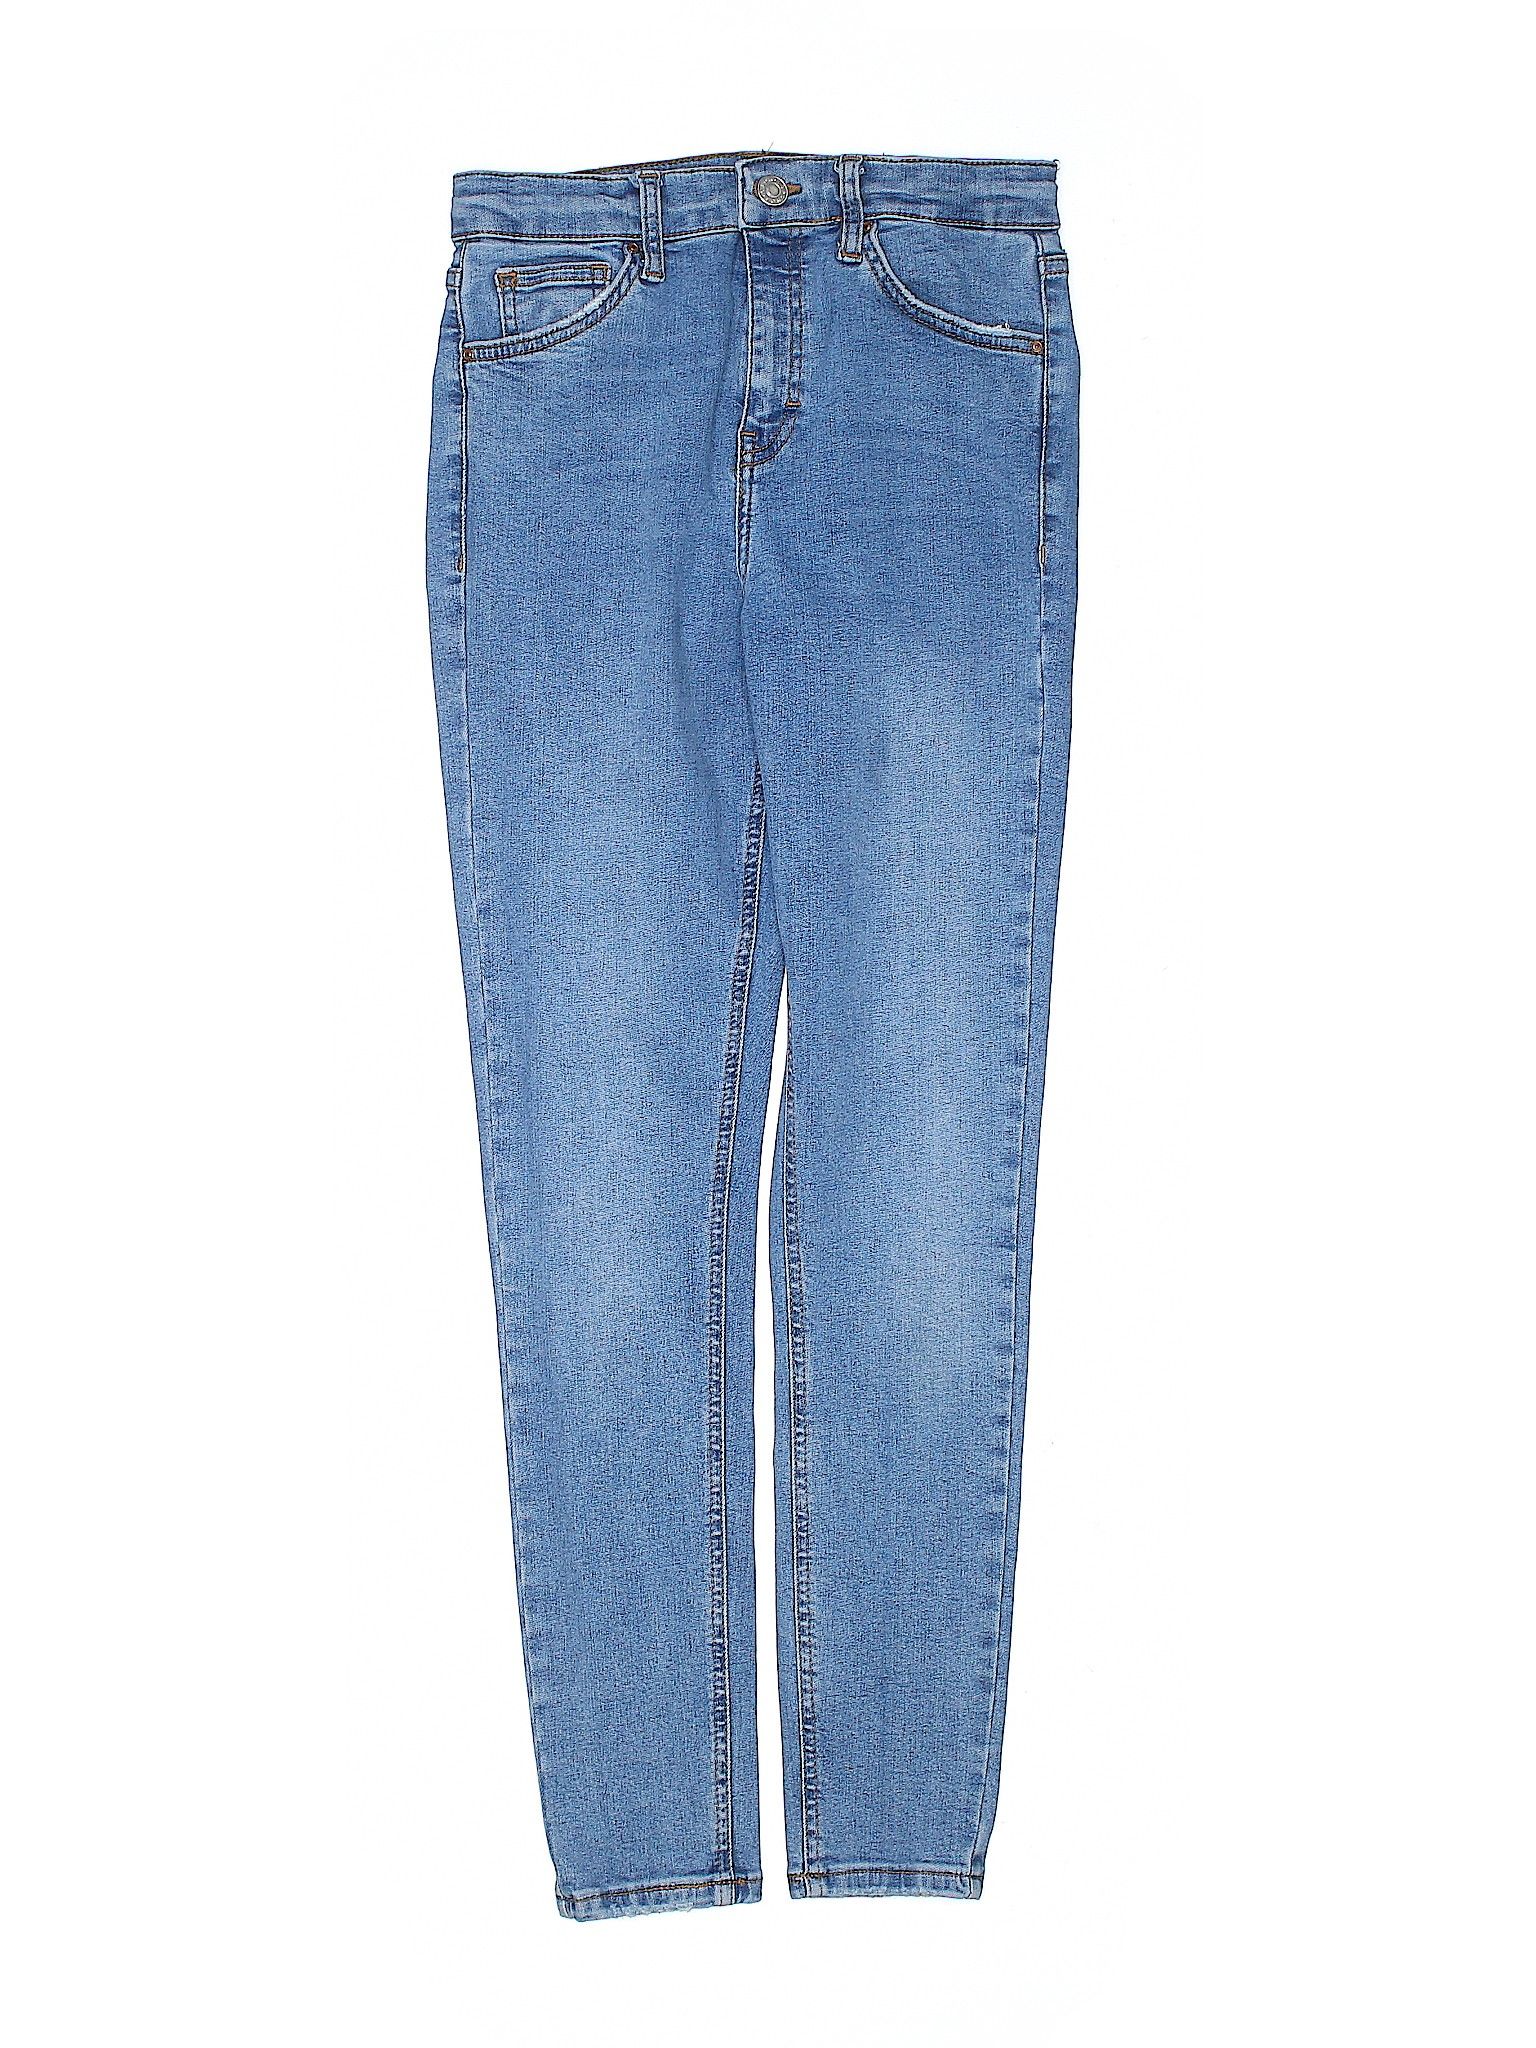 Petite Topshop Jeans Size 6 mo: Blue Girls Bottoms - 44140670 | thredUP